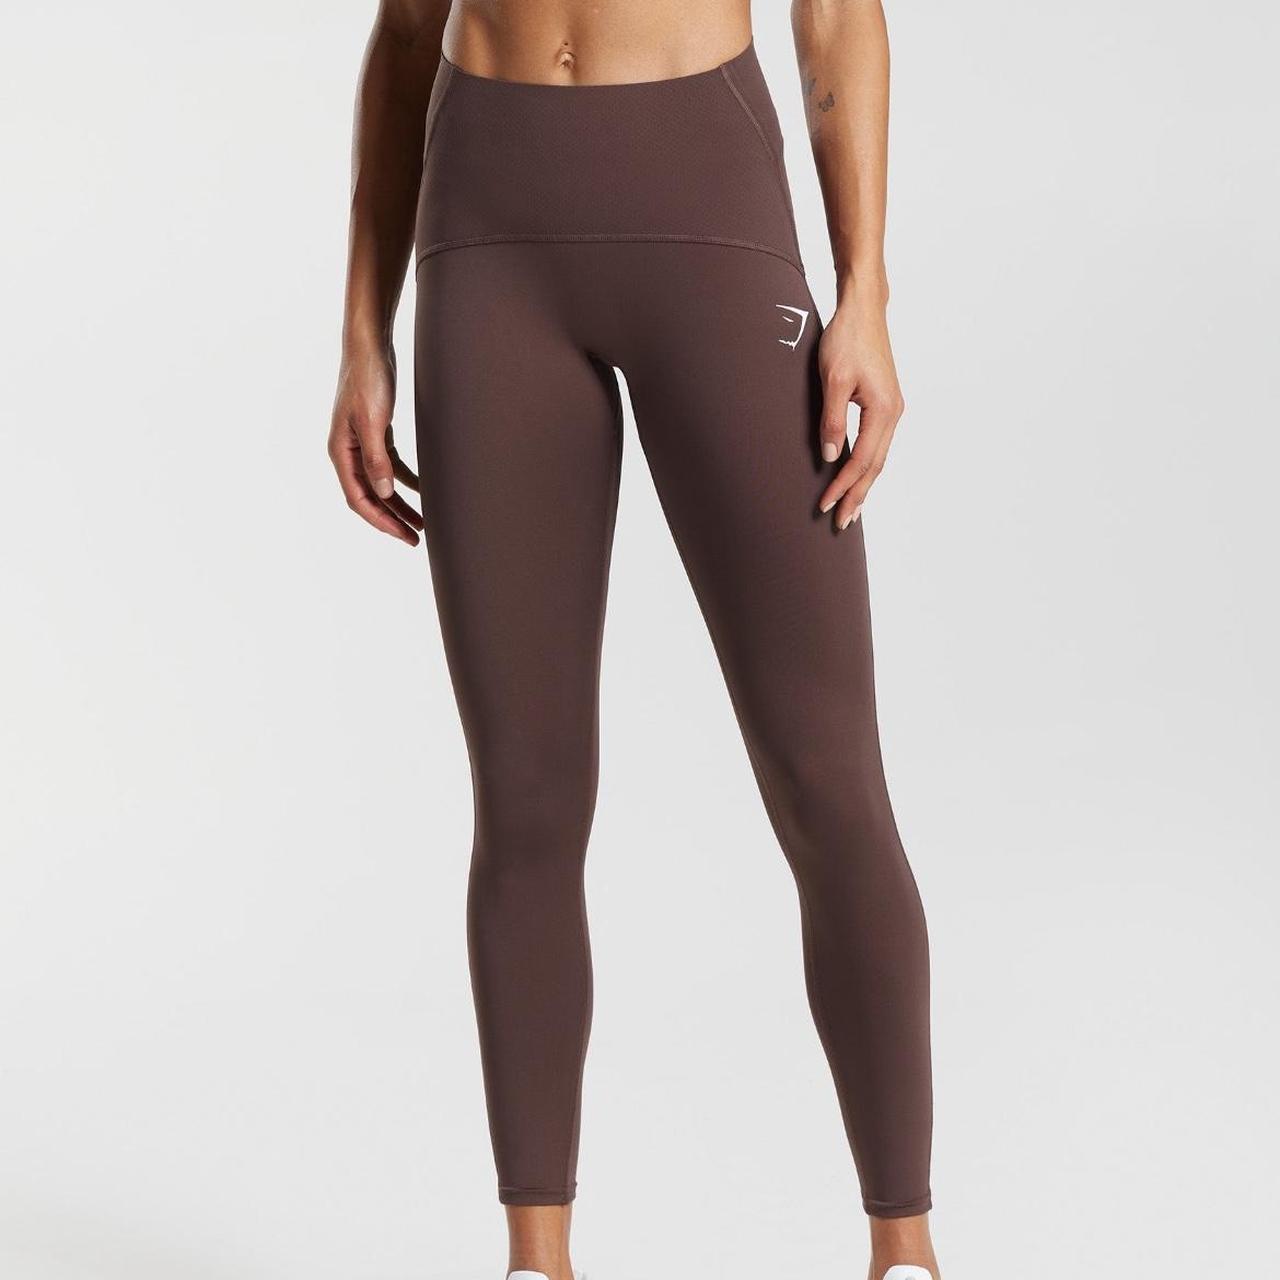 XS gymshark waist support leggings chocolate brown, - Depop